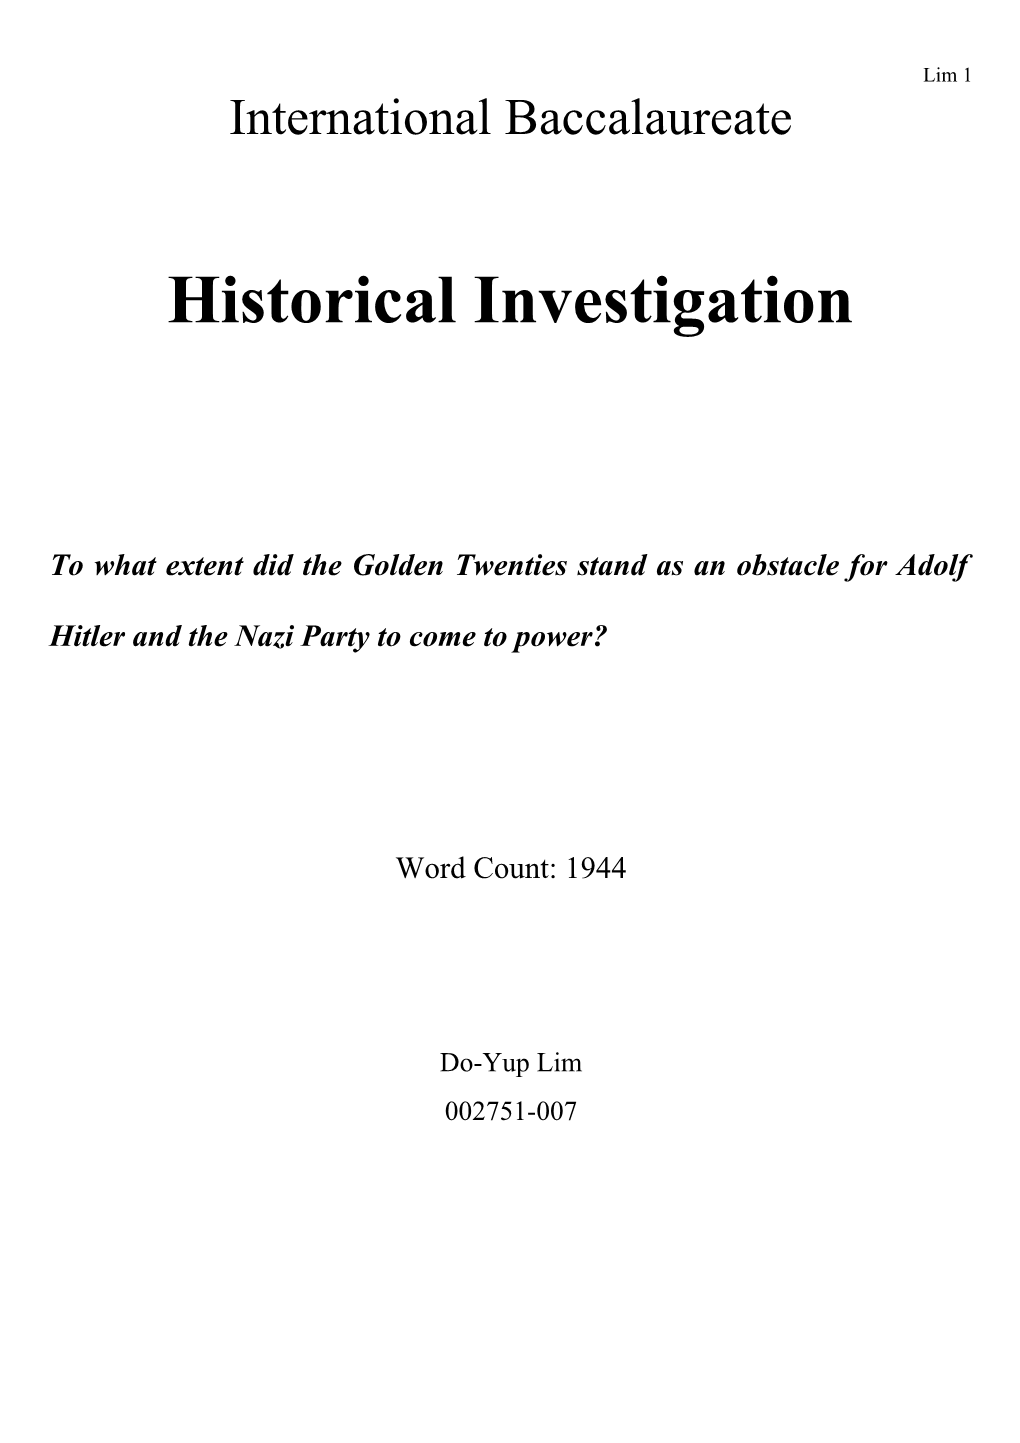 Historical Investigation